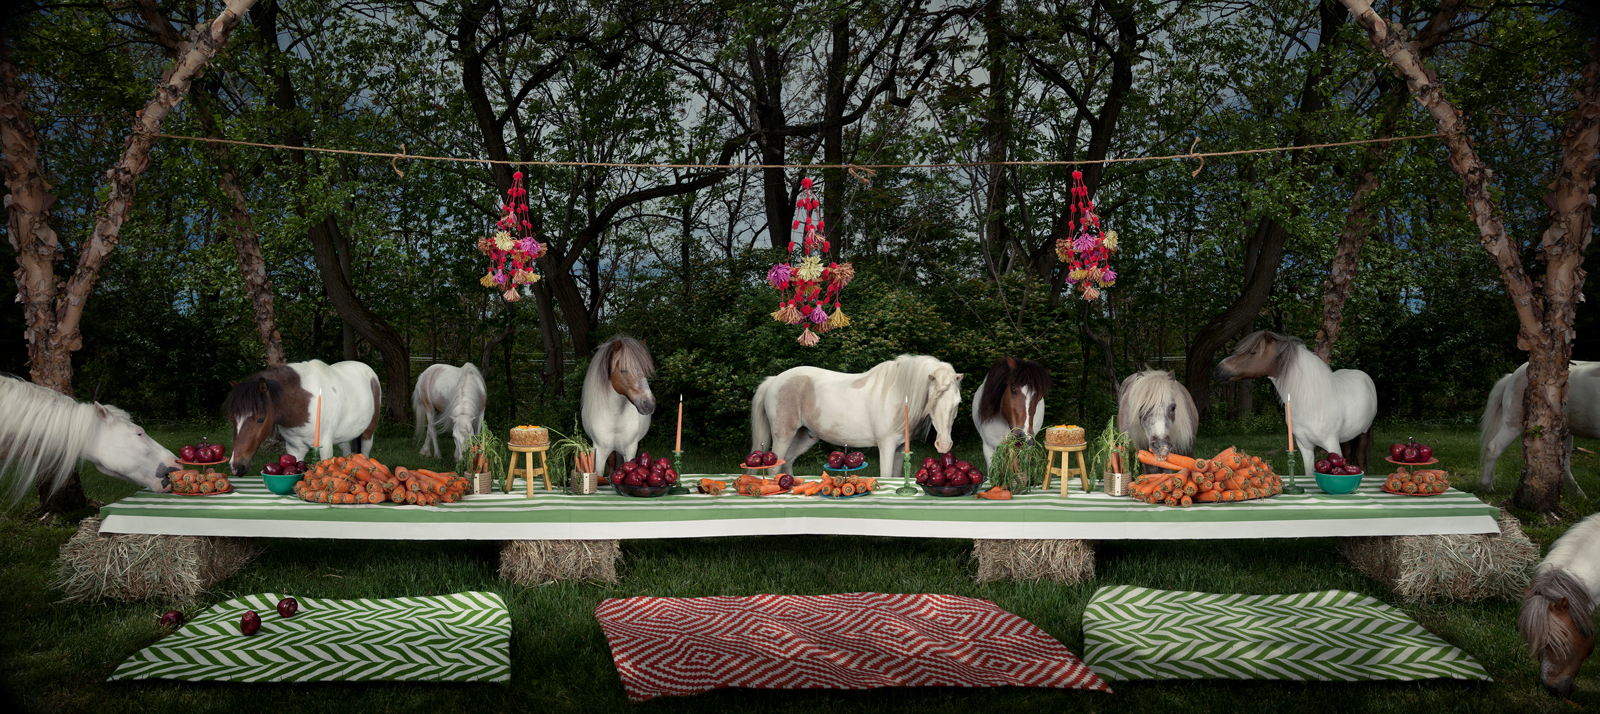  The Shetland Pony Feast  United States, 2013  10”x22” | 20”x45” | 40”x89” 